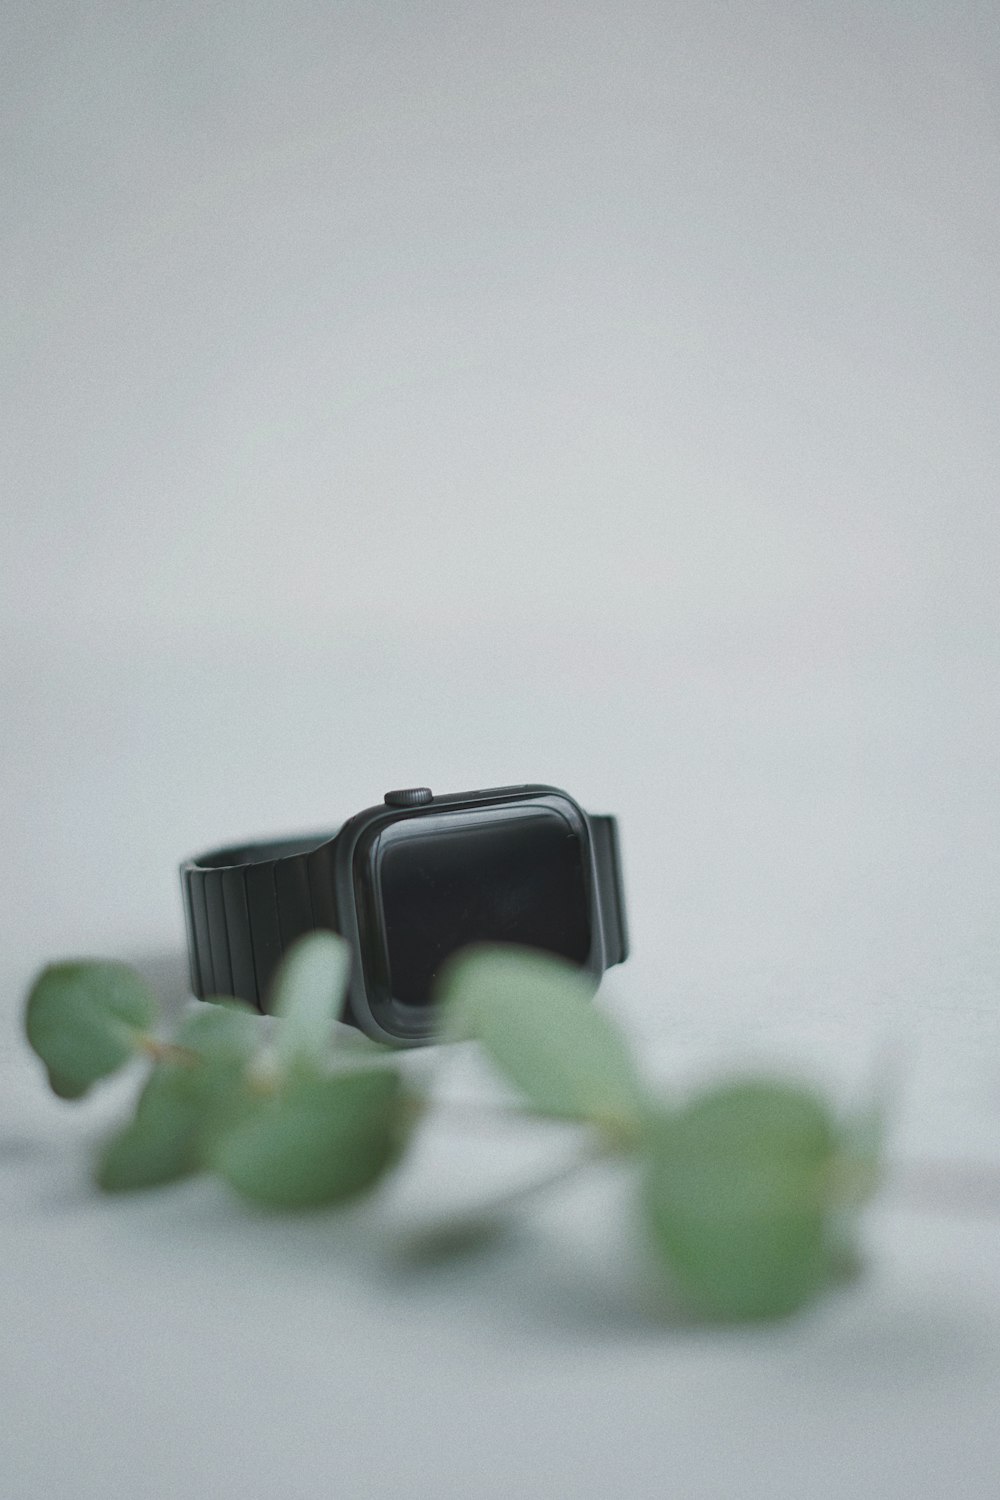 black smart watch beside green leafed plant